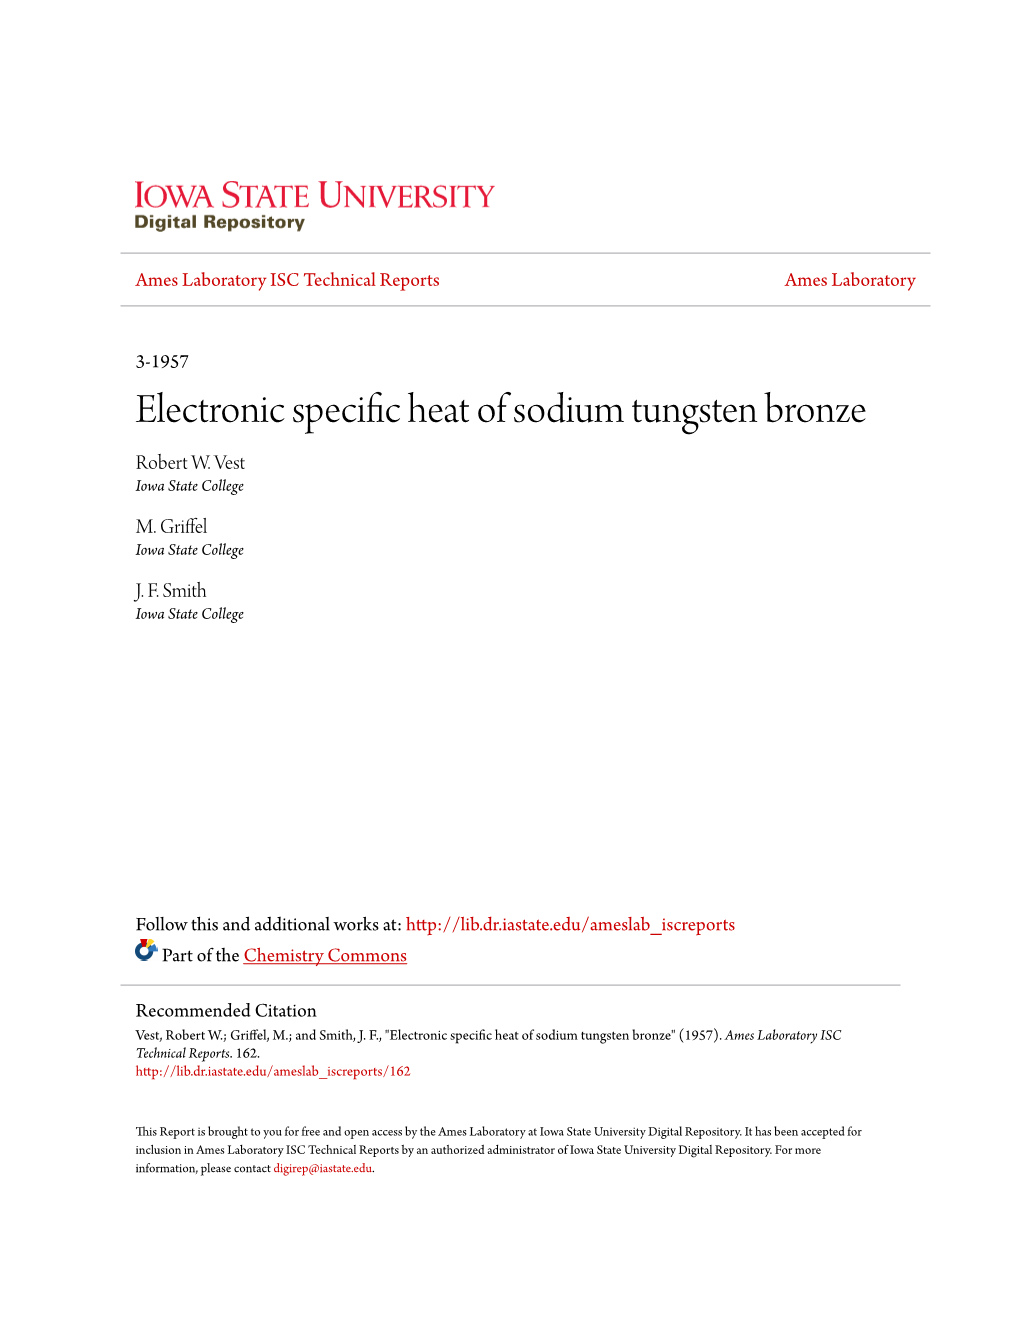 Electronic Specific Heat of Sodium Tungsten Bronze Robert W